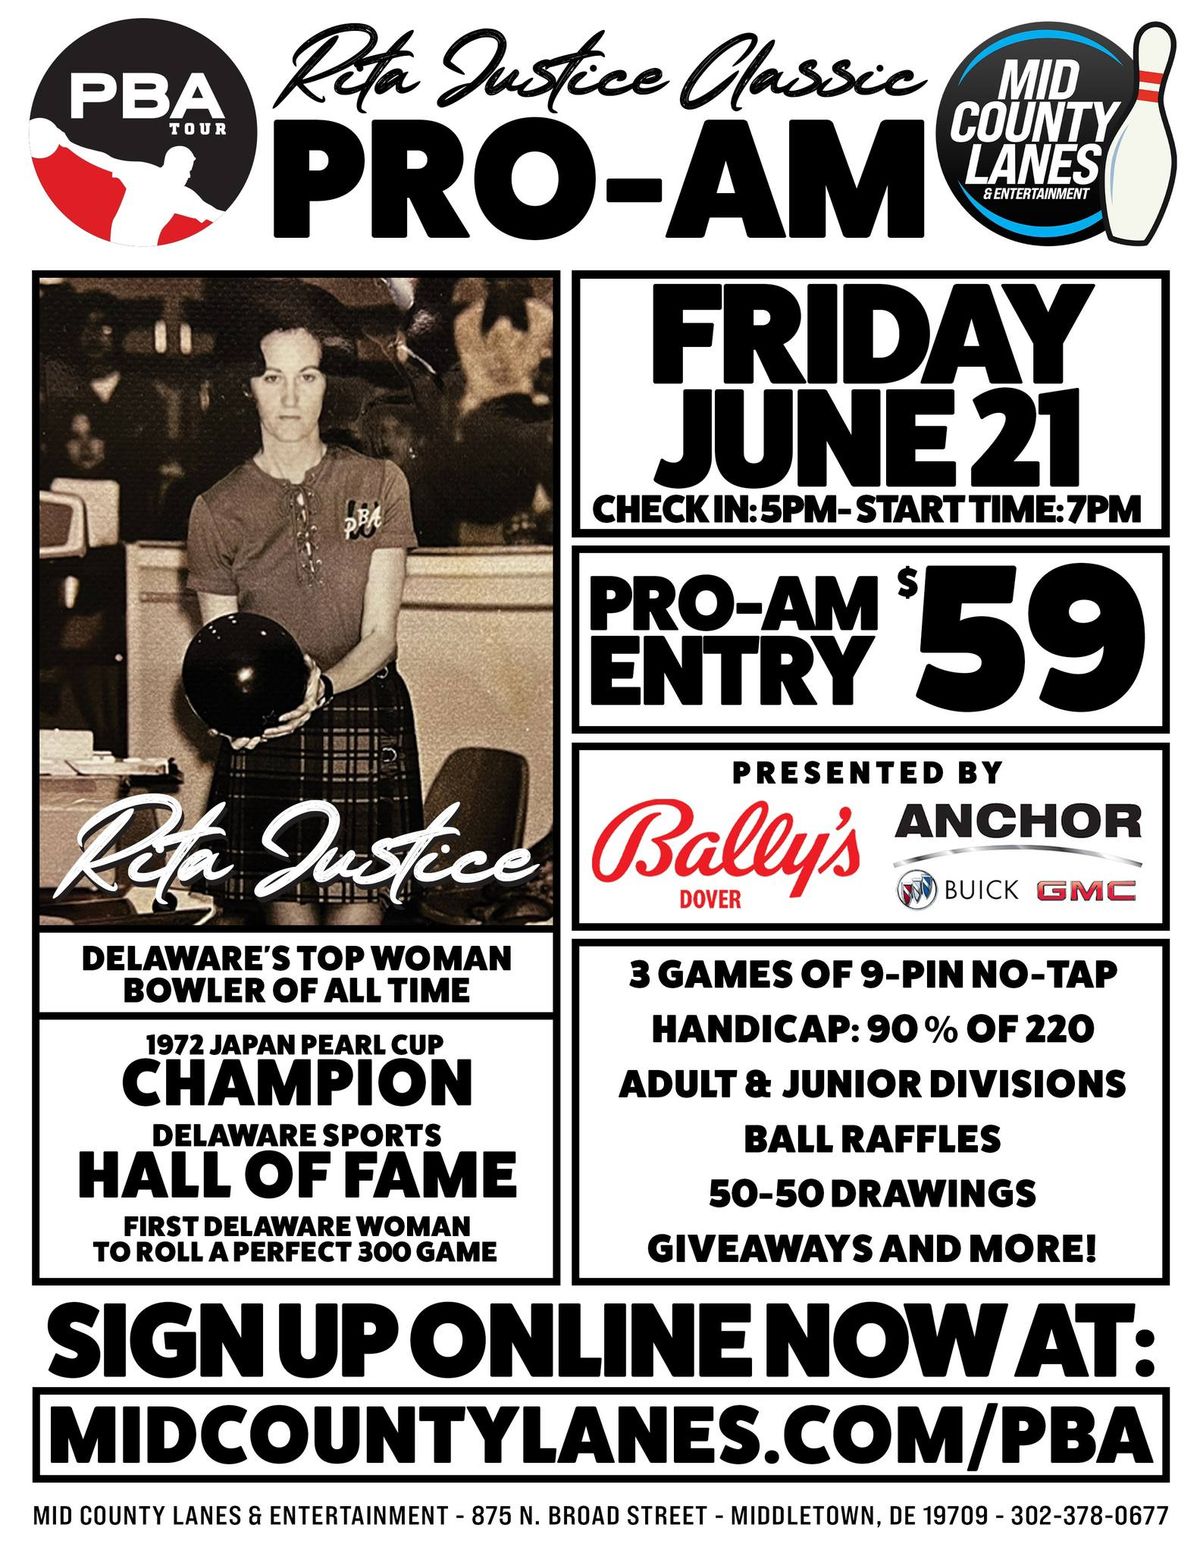 PBA Rita Justice Classic Pro-Am